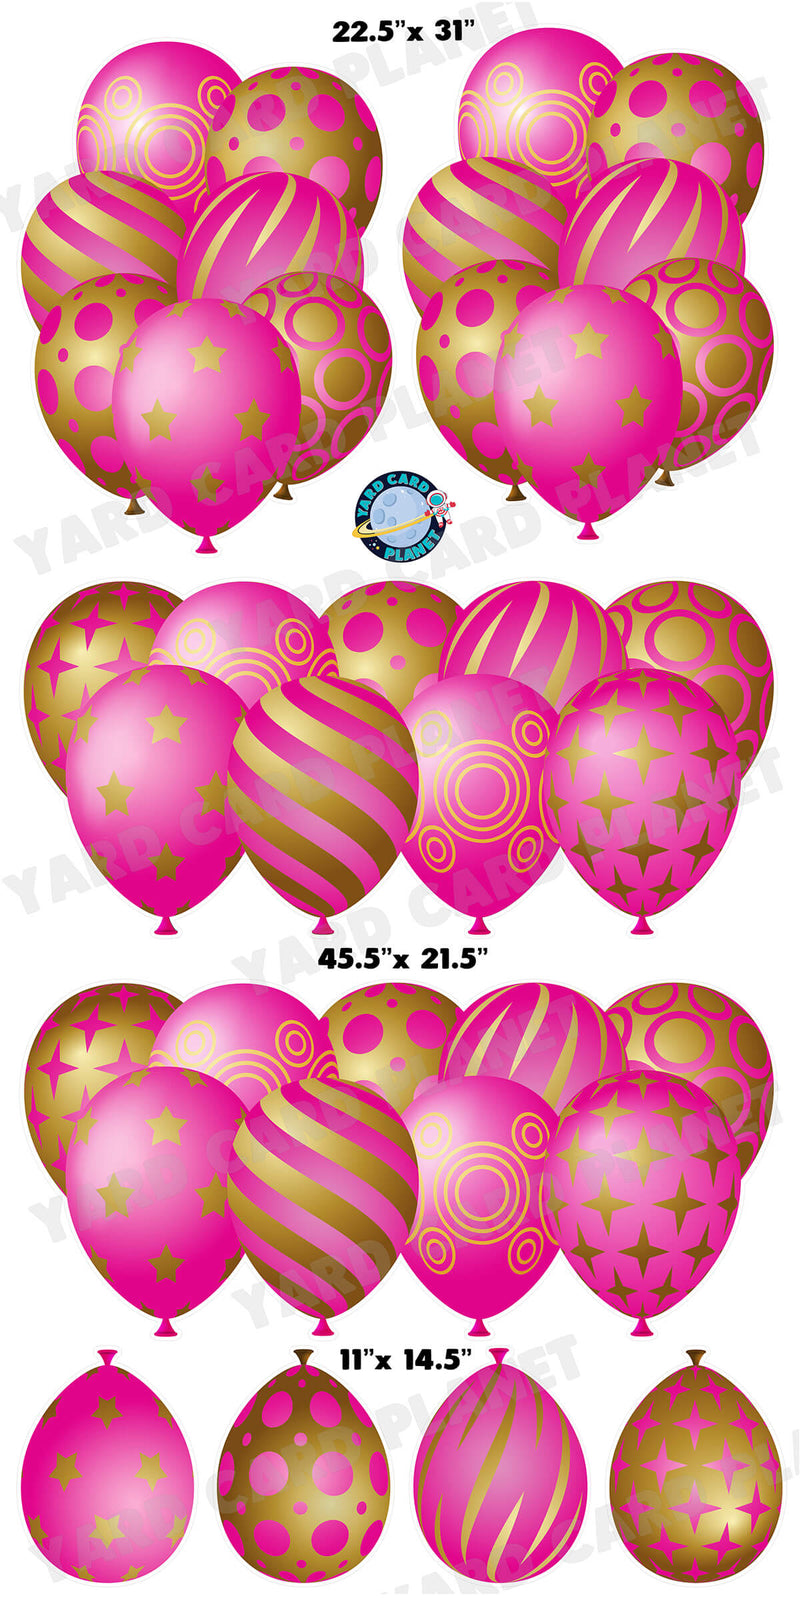 Hot Pink and Gold Elegant Metallic Balloons EZ Setup Panels and Borders Yard Card Set